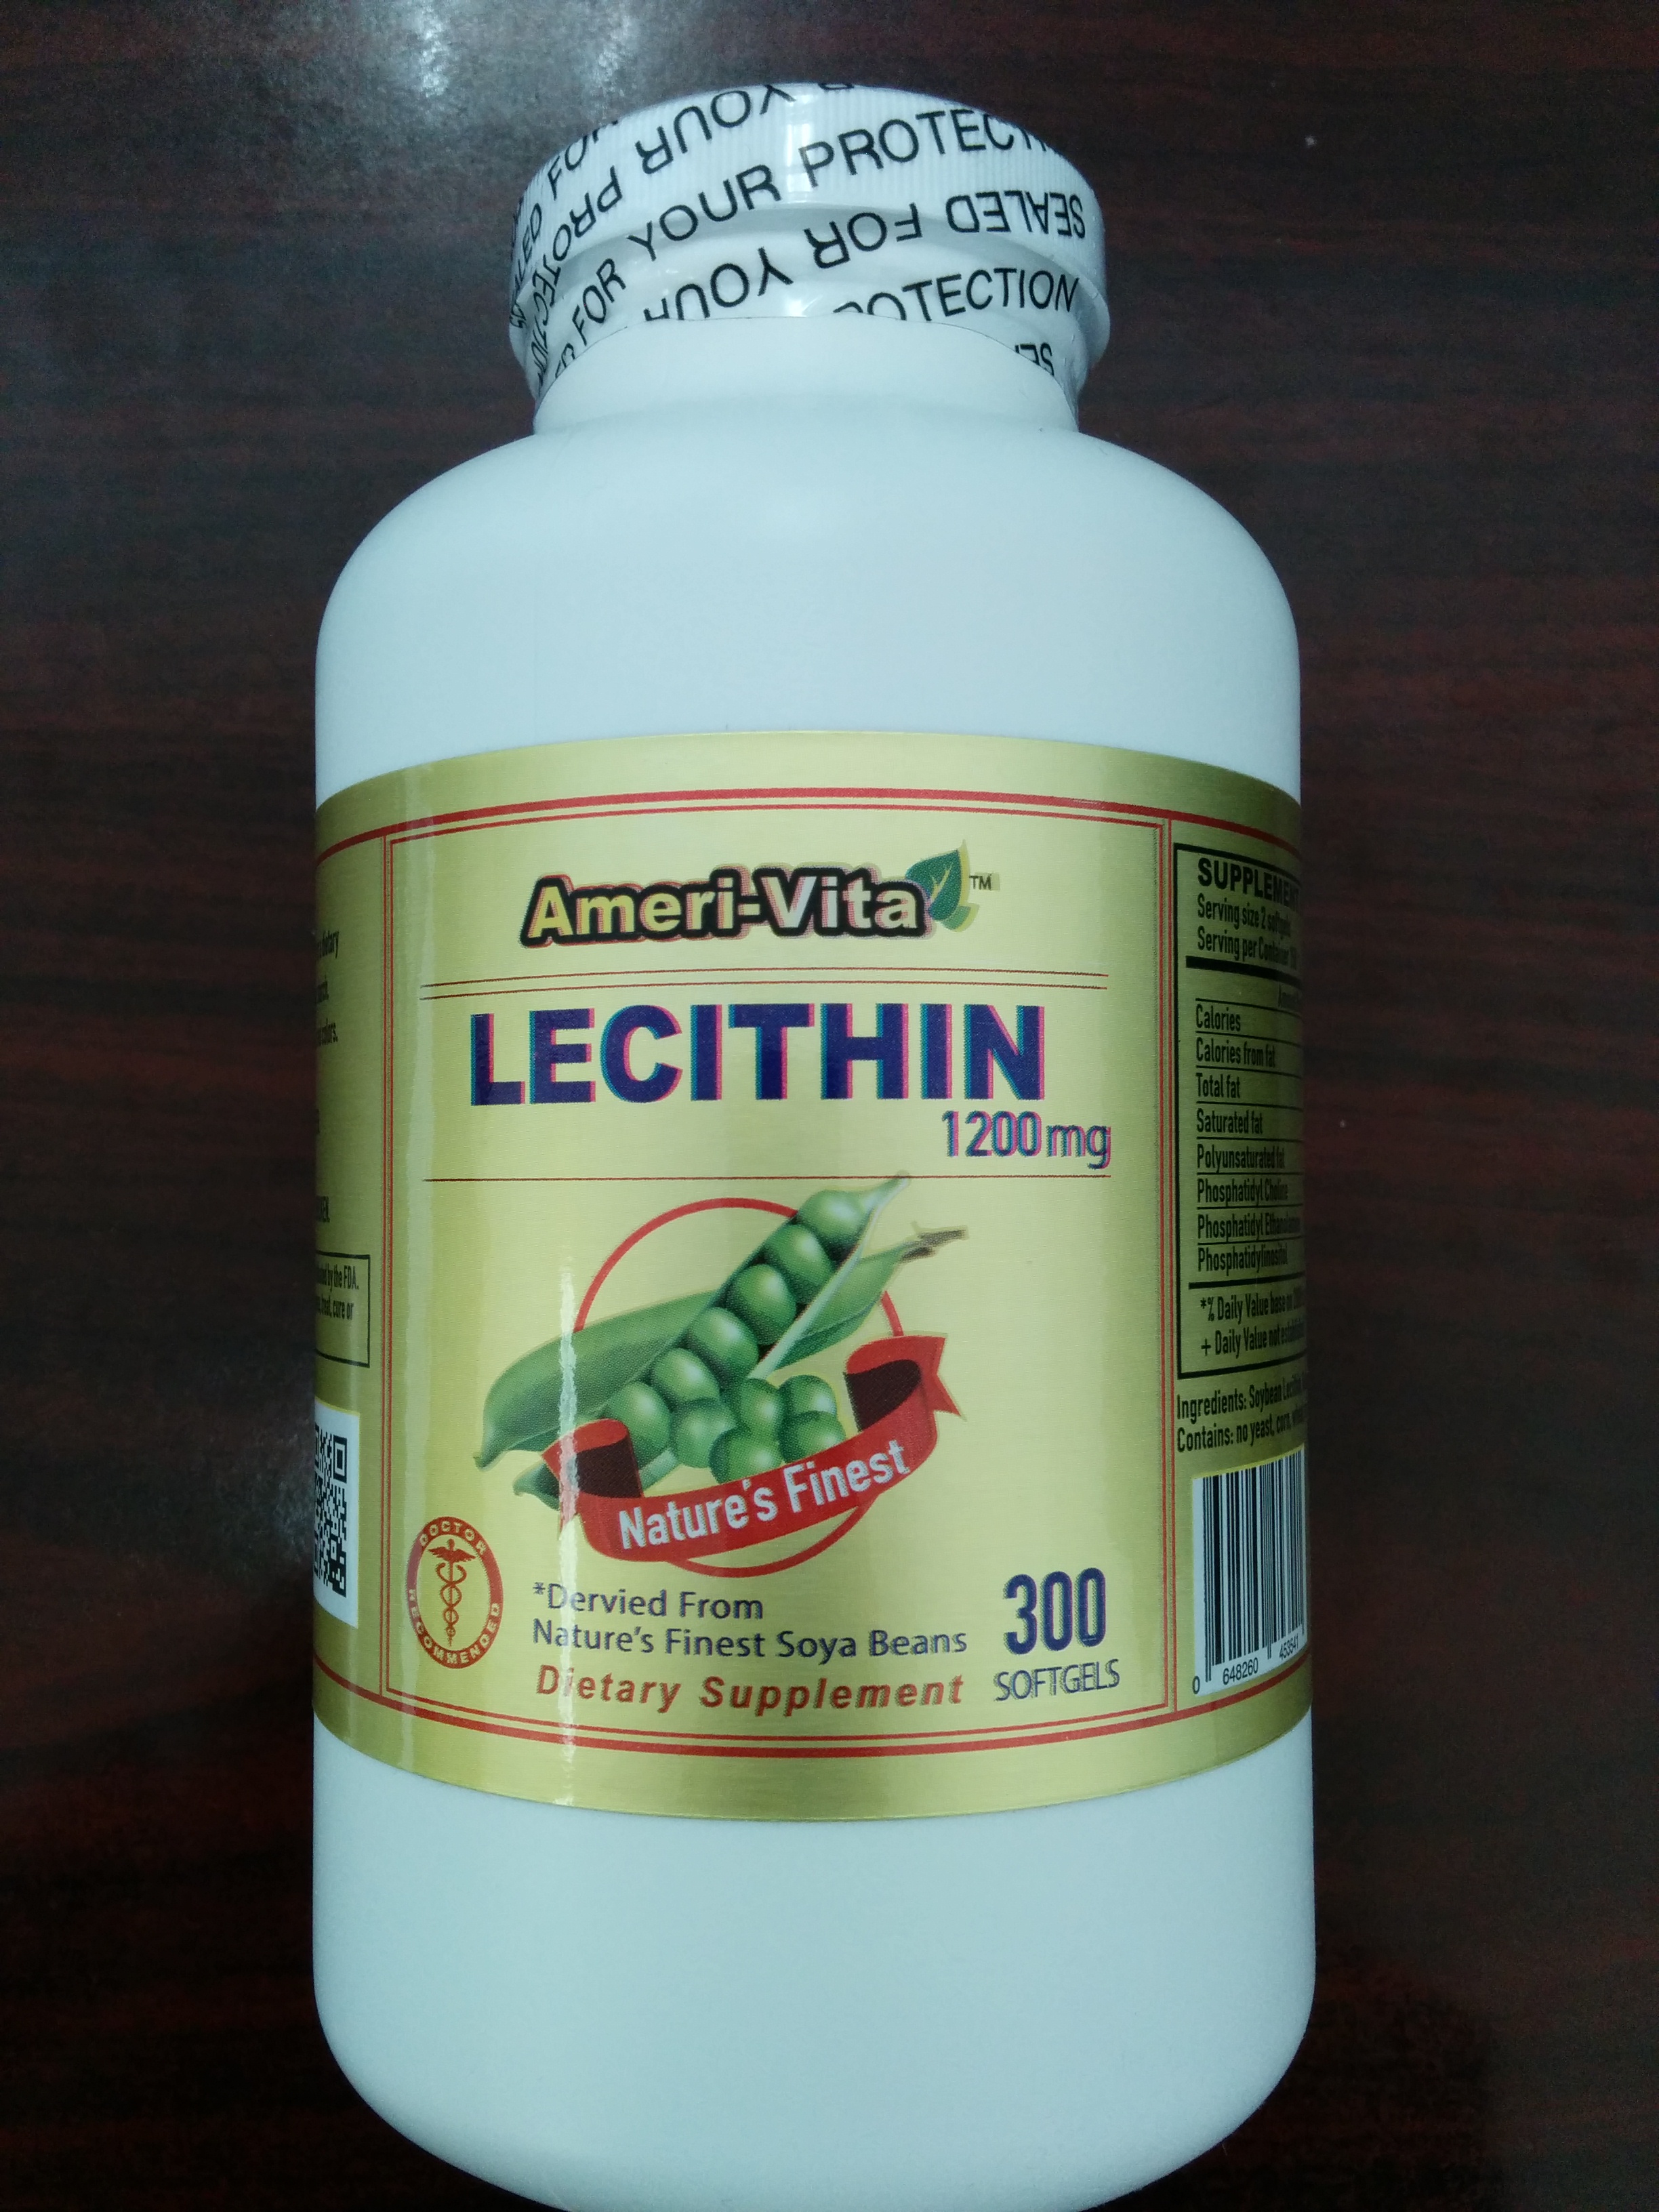 AmeriVita Lecithin (1.2g, 300 softgels)